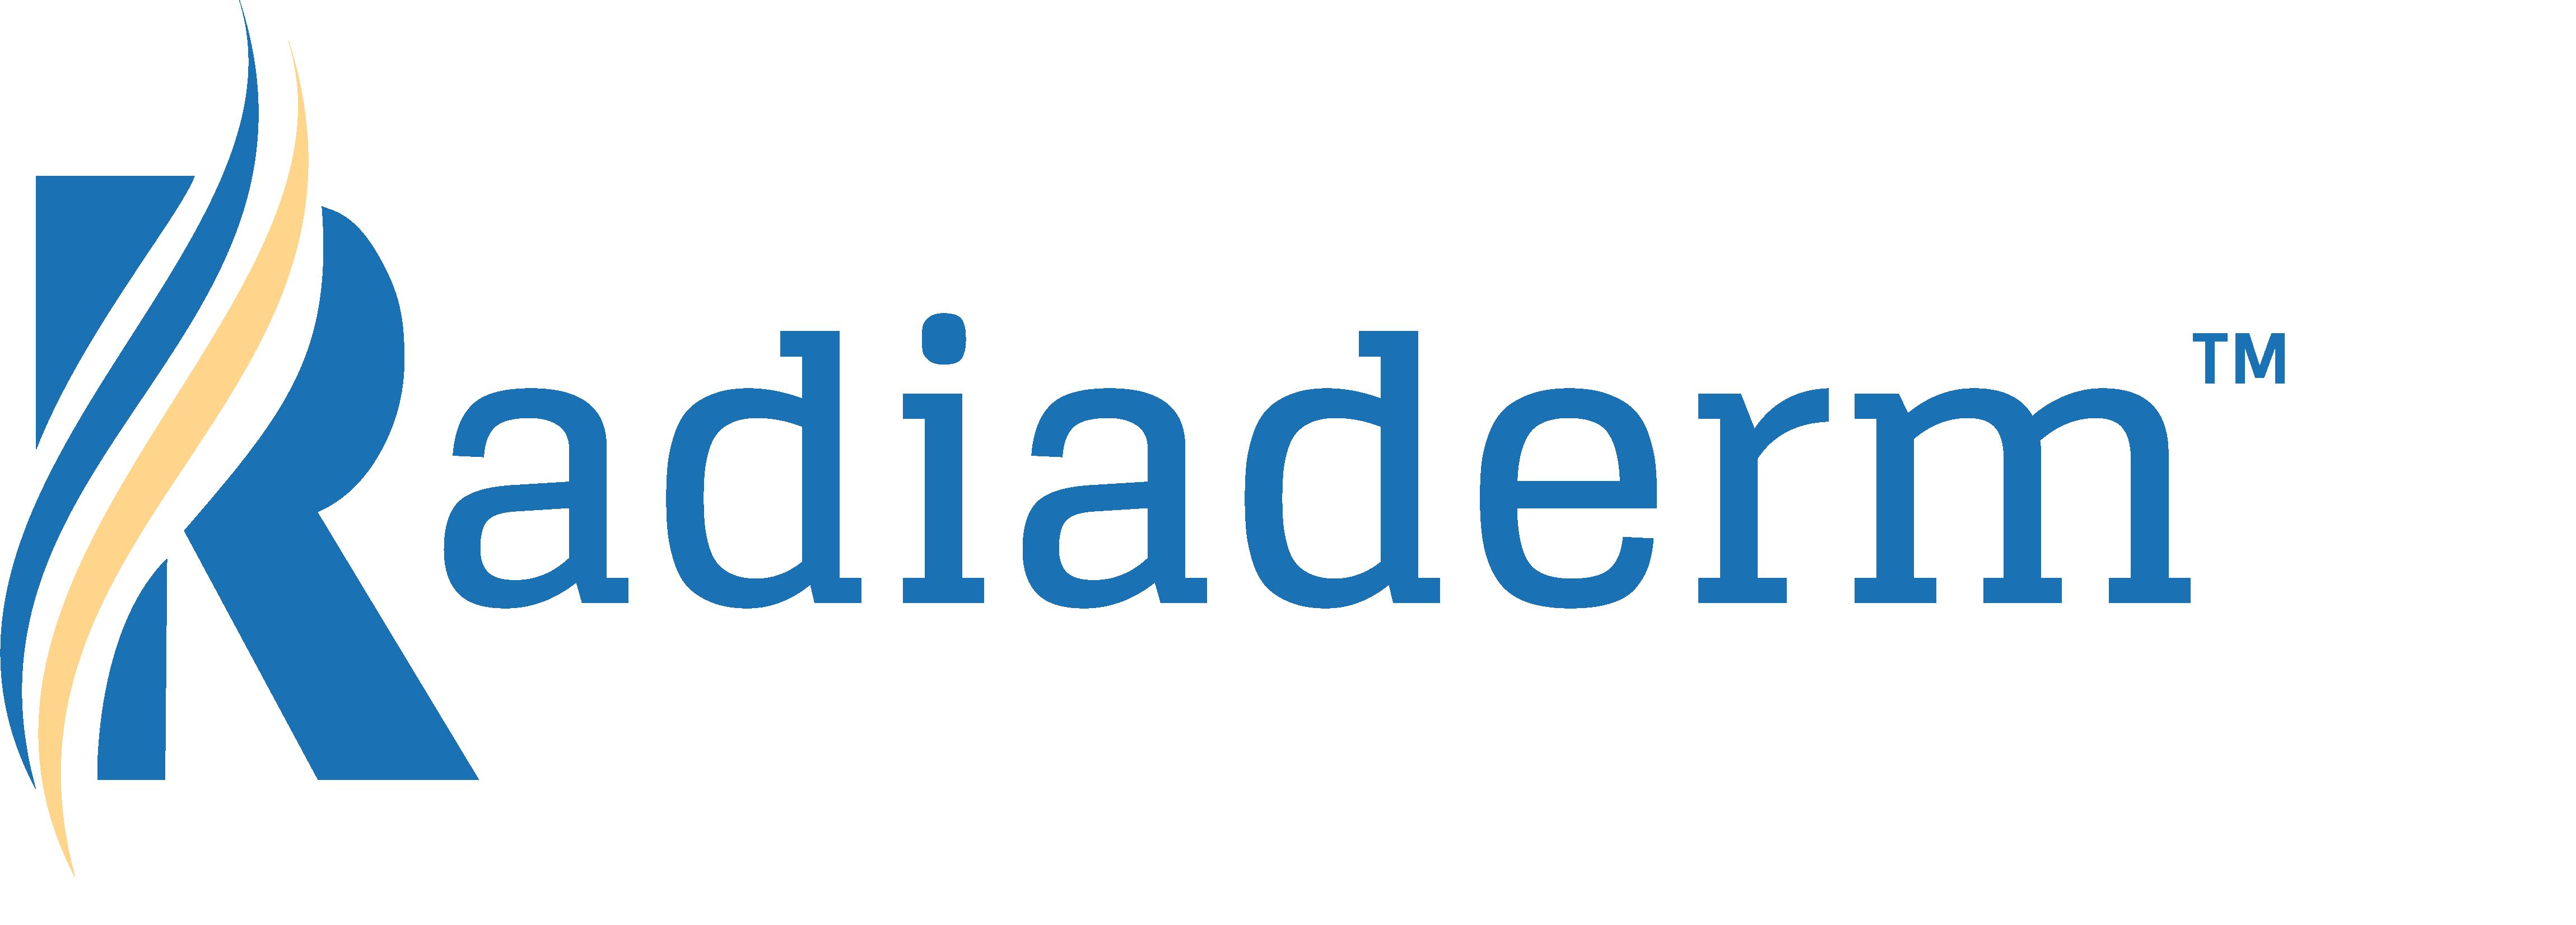 Radiaderm Ltd